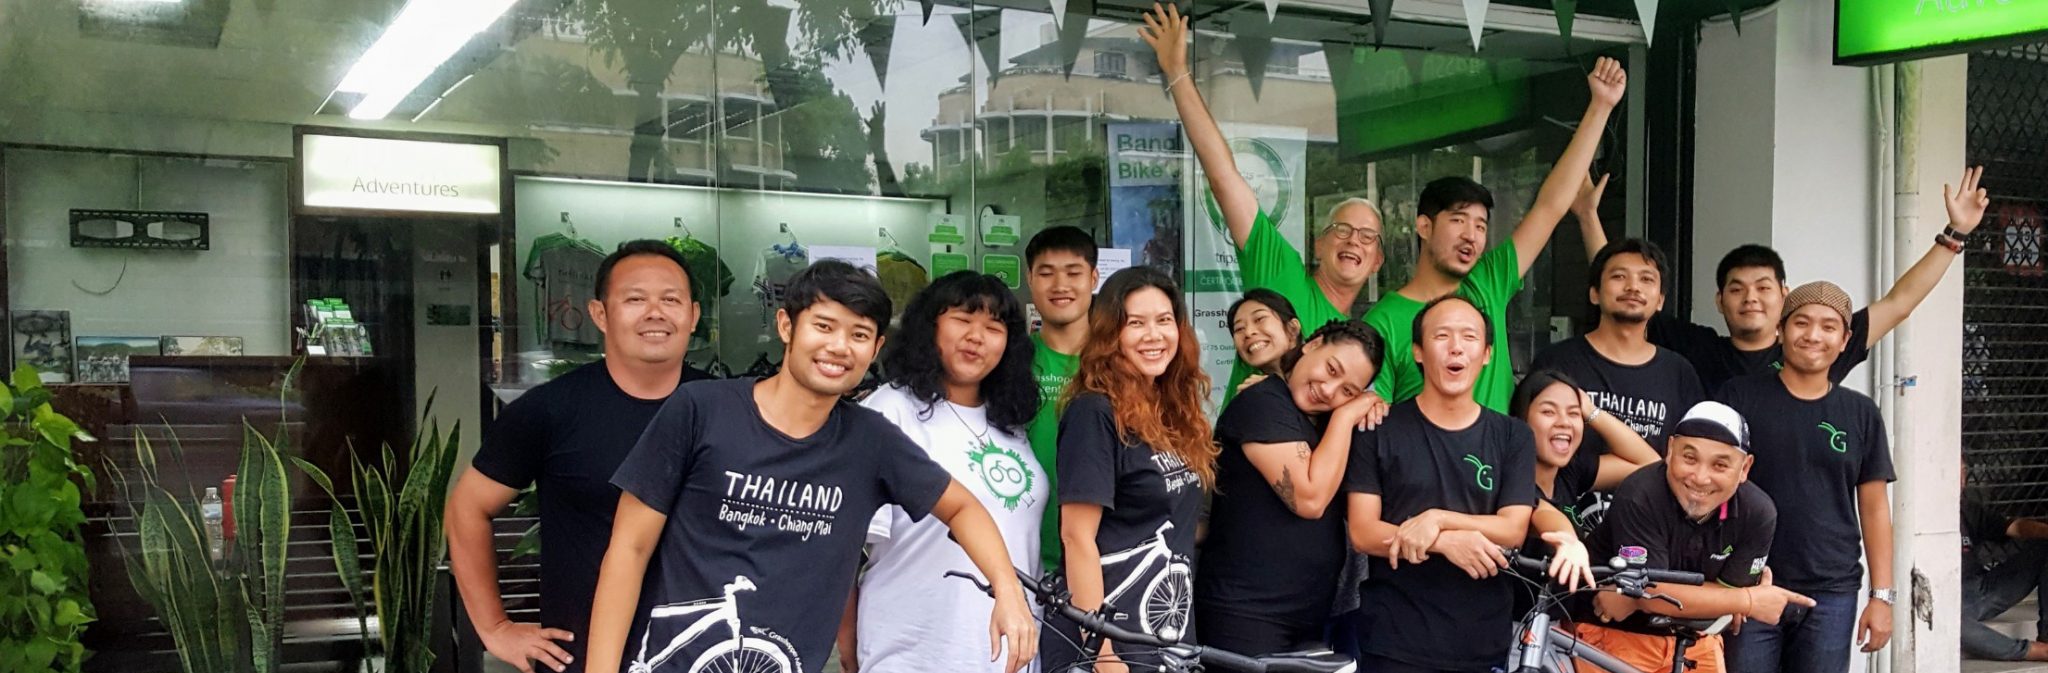 Grasshopper Adventures active-day-bike-tours-in-bangkok Team